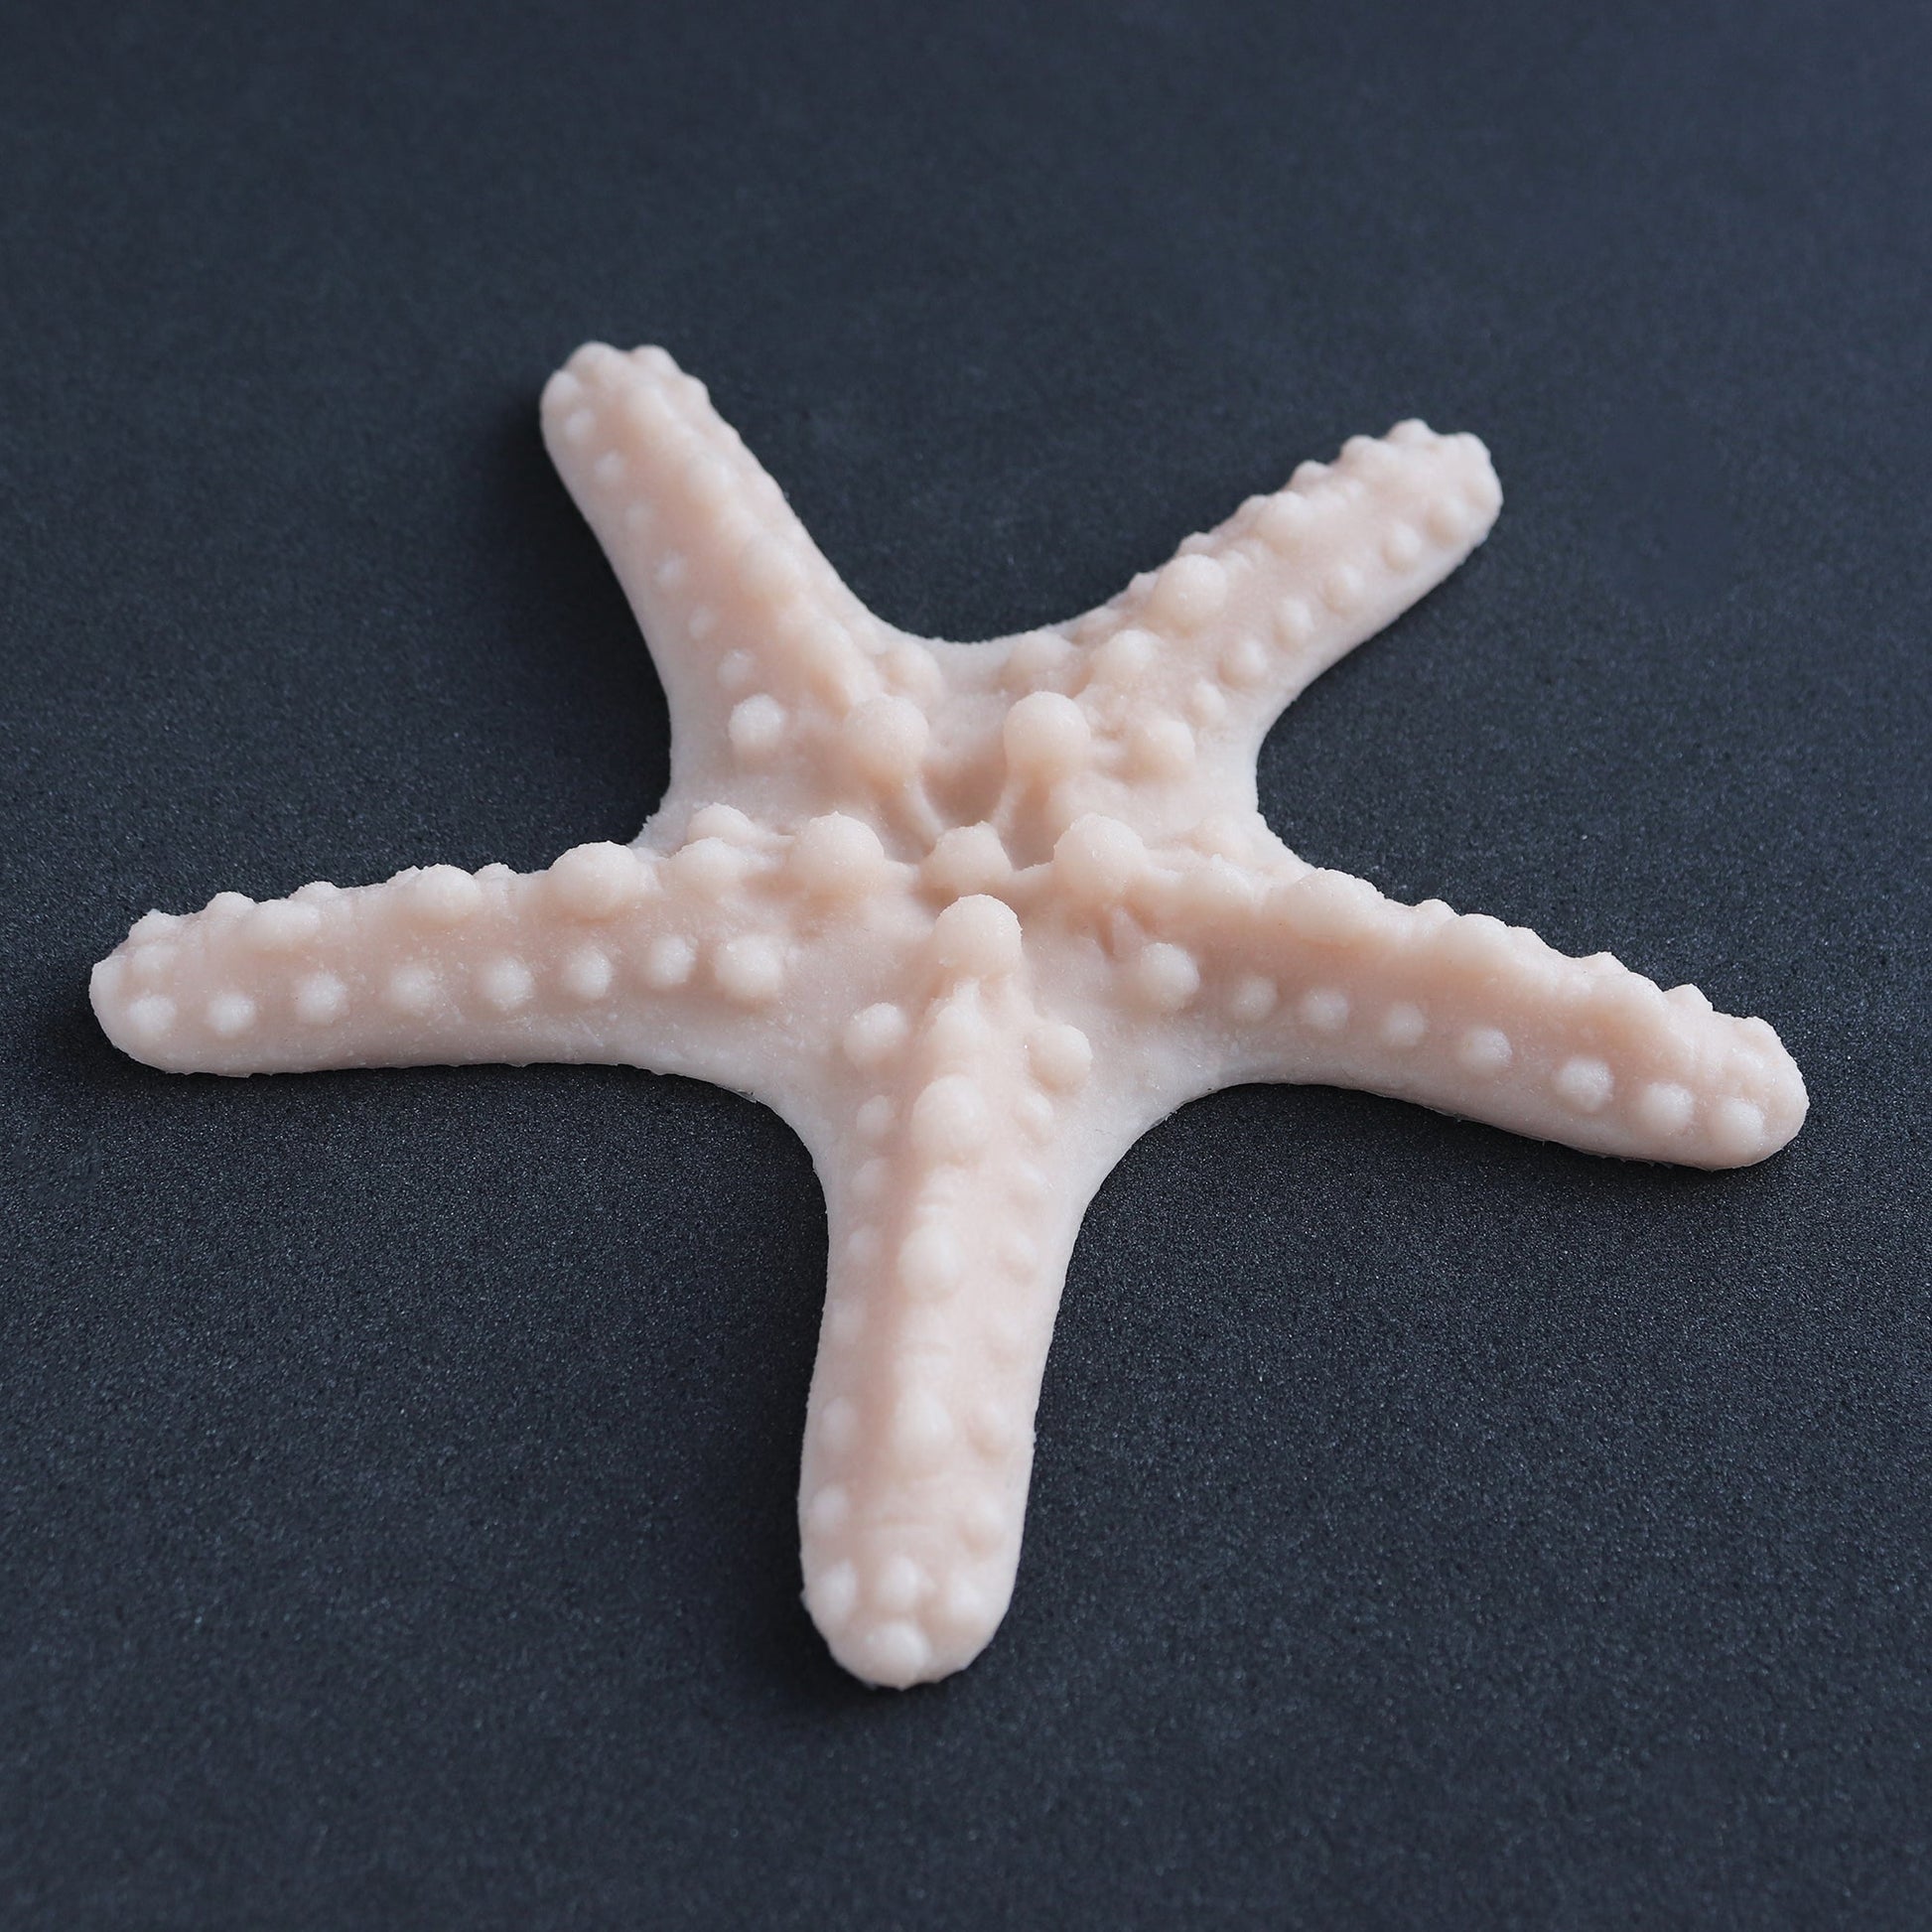 A starfish in vanilla shade at an angle on a black surface